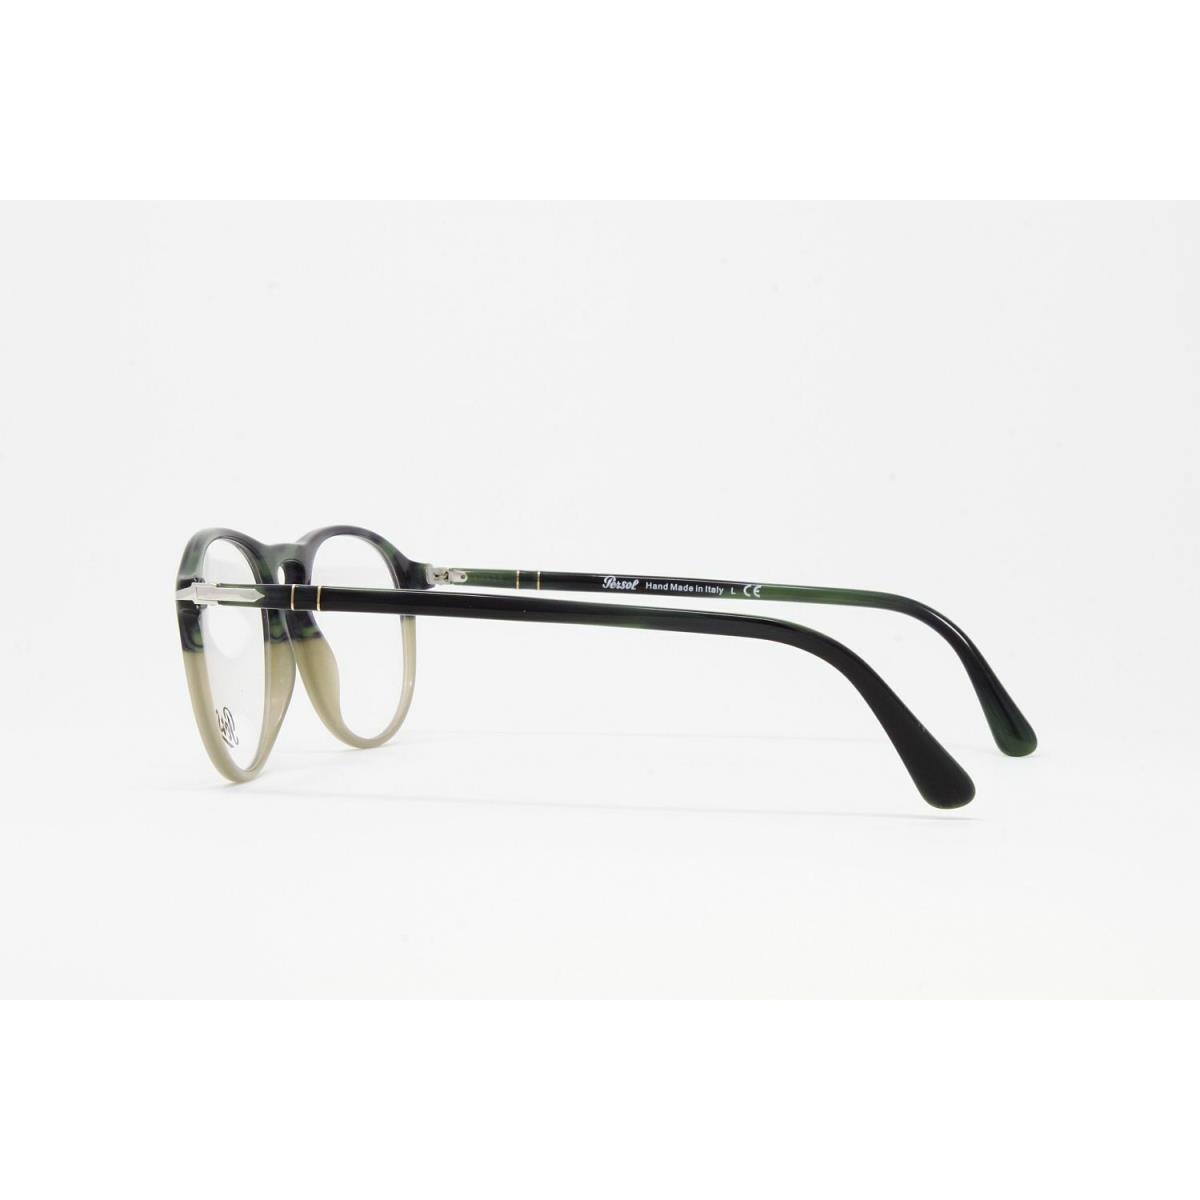 Persol eyeglasses  - Green Frame 2